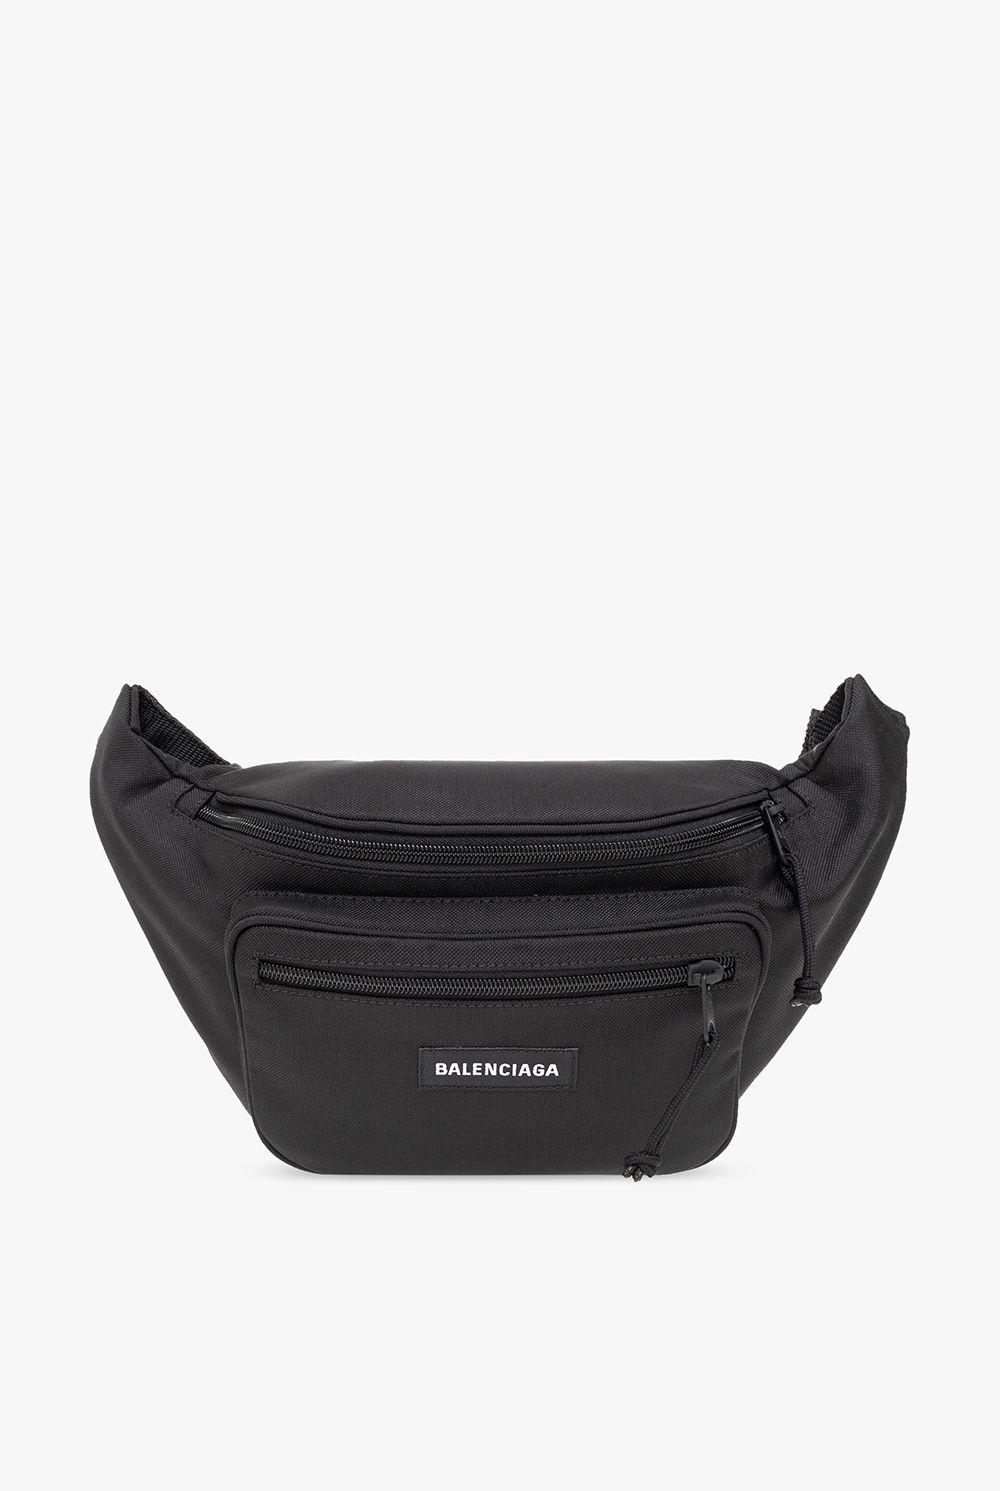 Balenciaga 'explorer' Belt Bag in Black | Lyst